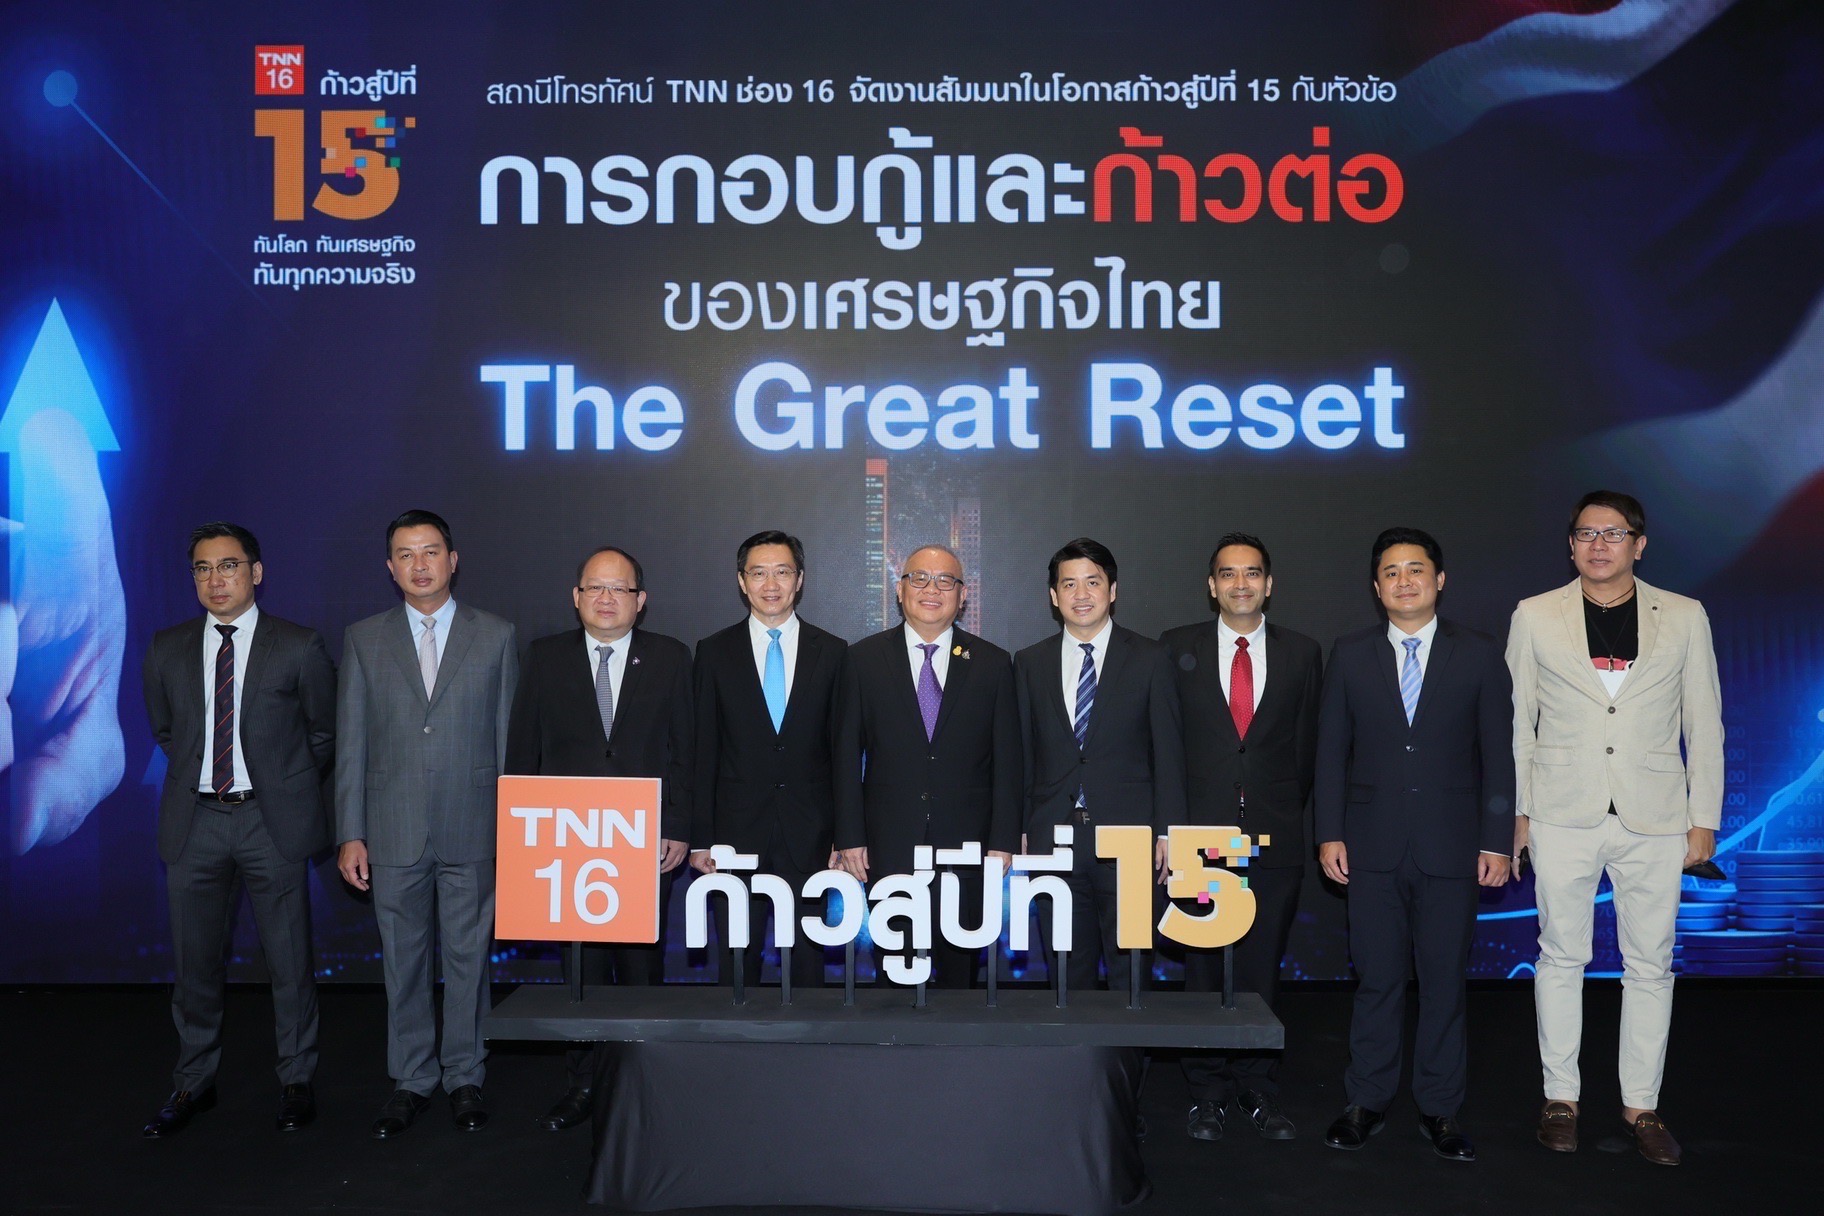 “TNN ช่อง 16” ฉลองก้าวสู่ปีที่ 15 จัดสัมมนาใหญ่ “การกอบกู้และก้าวต่อของเศรษฐกิจไทย The Great Reset” เตรียมพร้อมคนไทยสู่โลกหลังโควิด-19